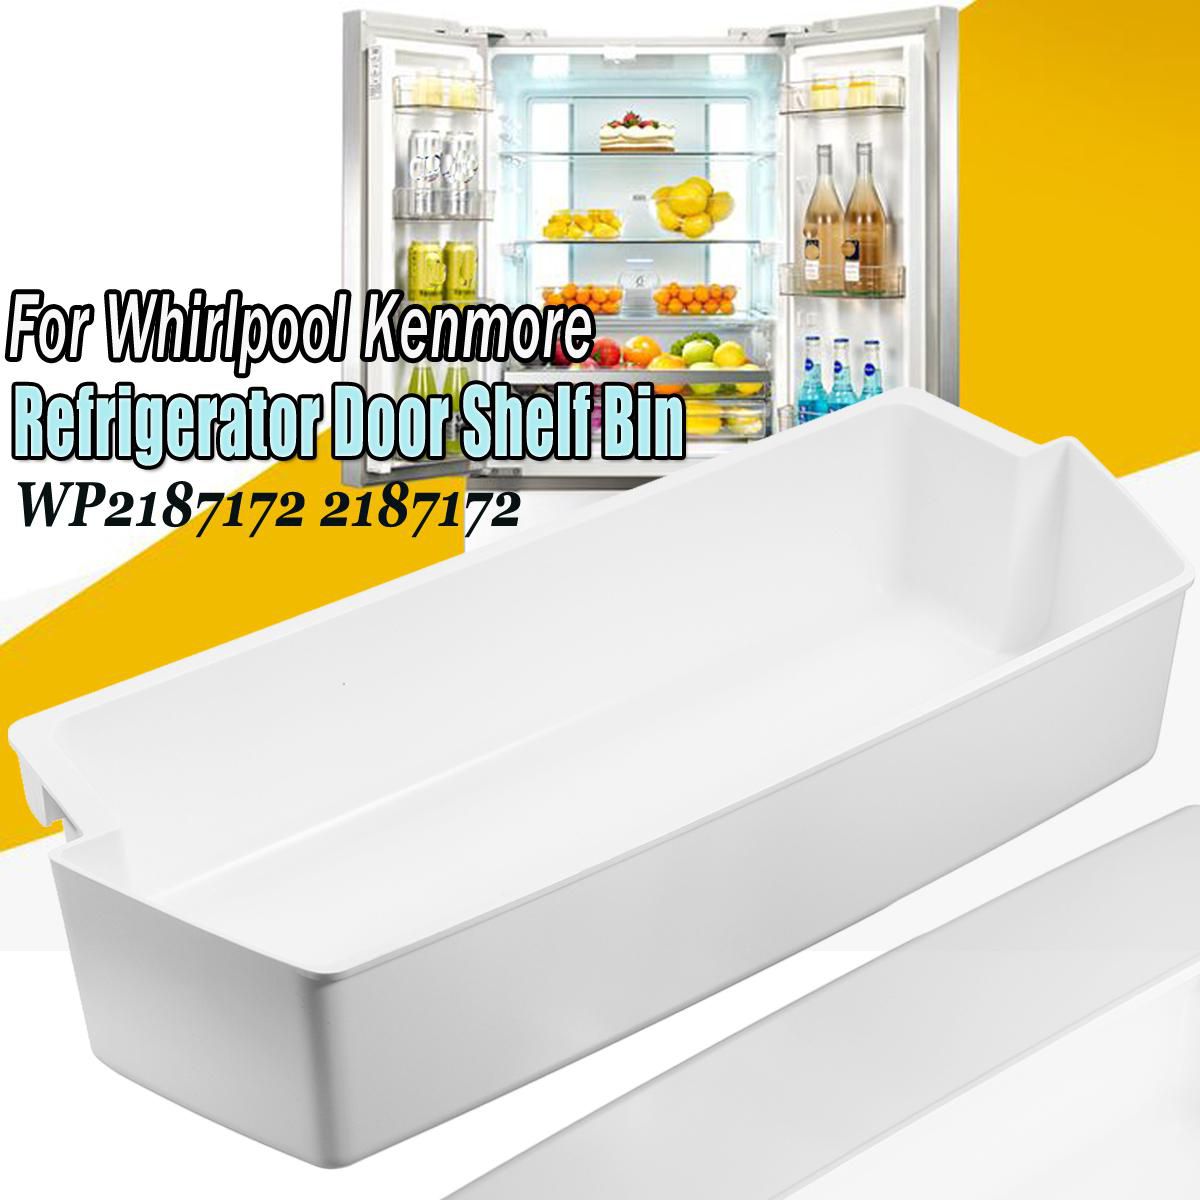 2 Refrigerator Door Shelf Bin 2187172 For Whirlpool Maytag Amana Roper Kenmore